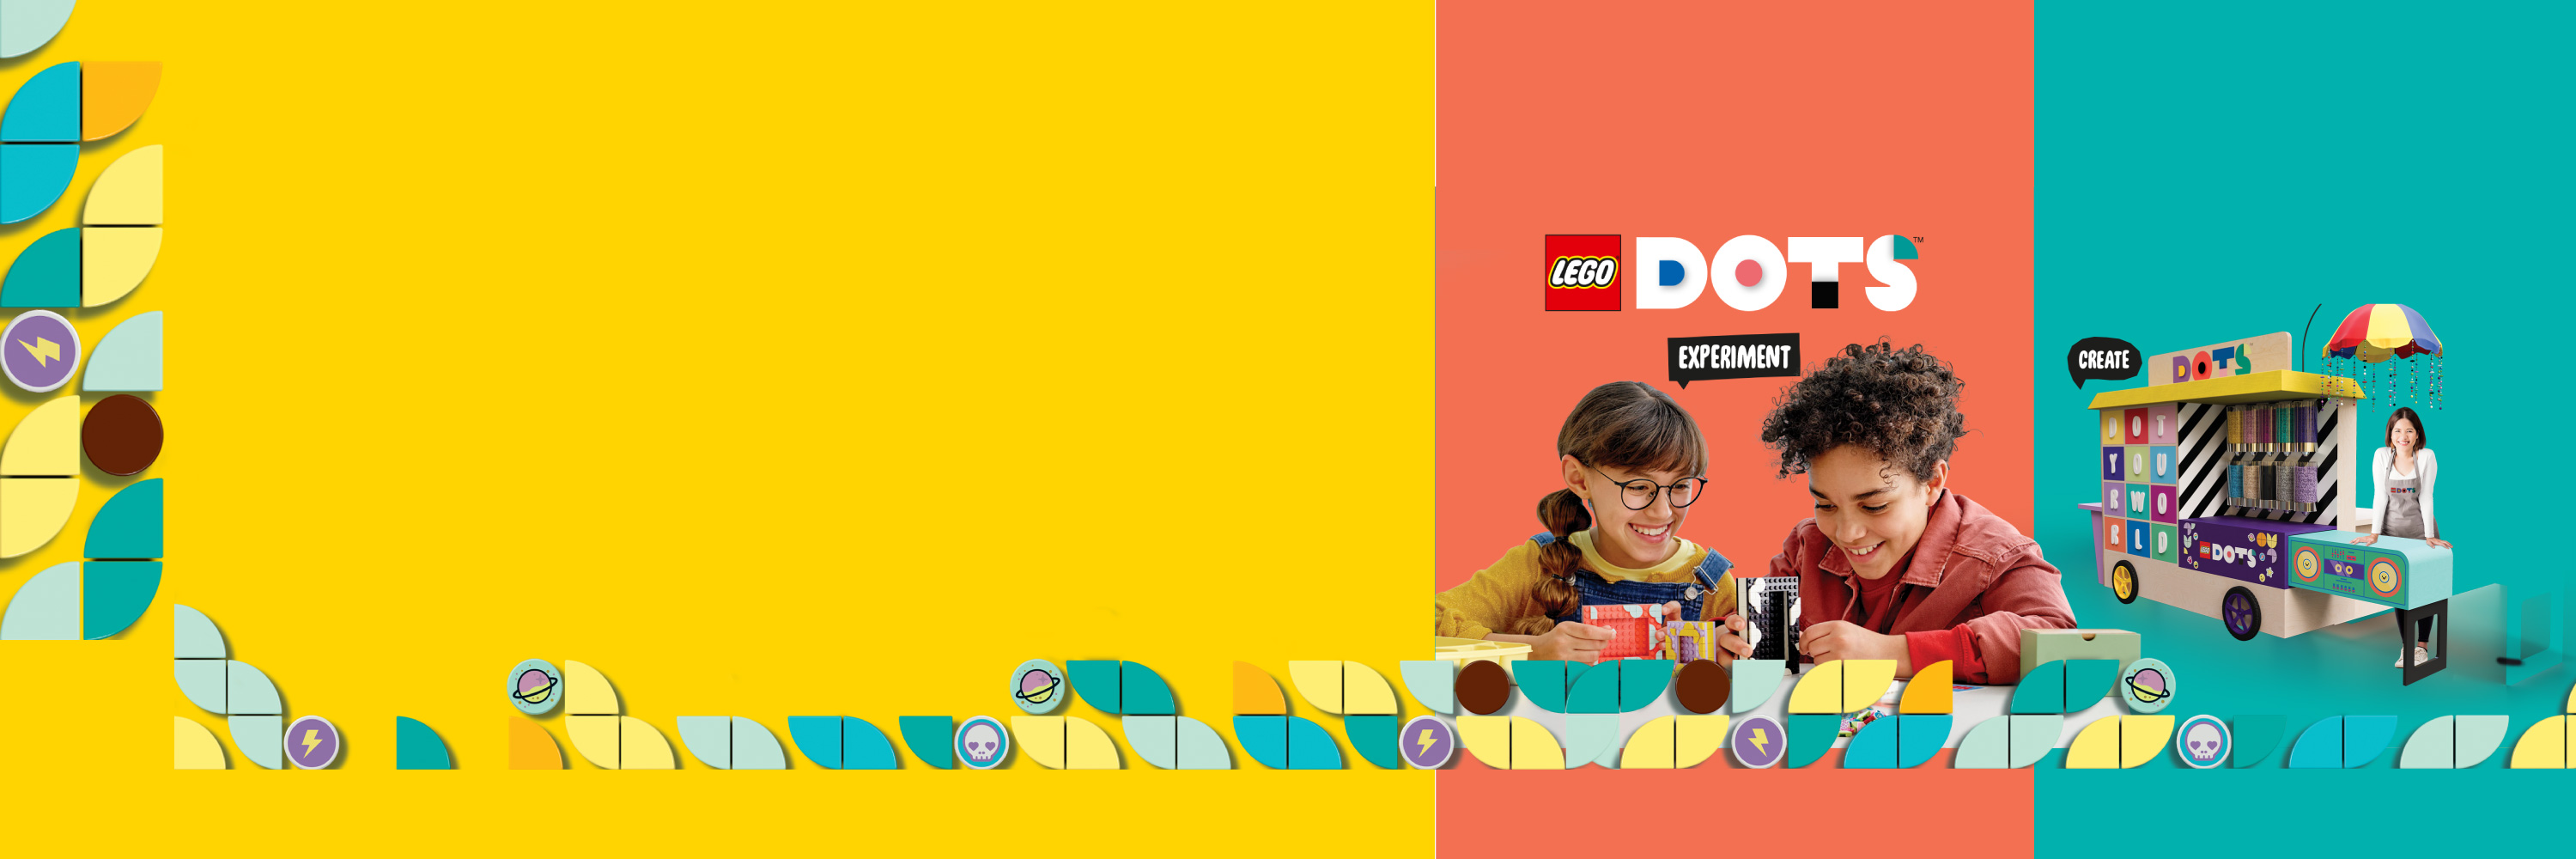 LEGO Dots Web Header 3 1 Final